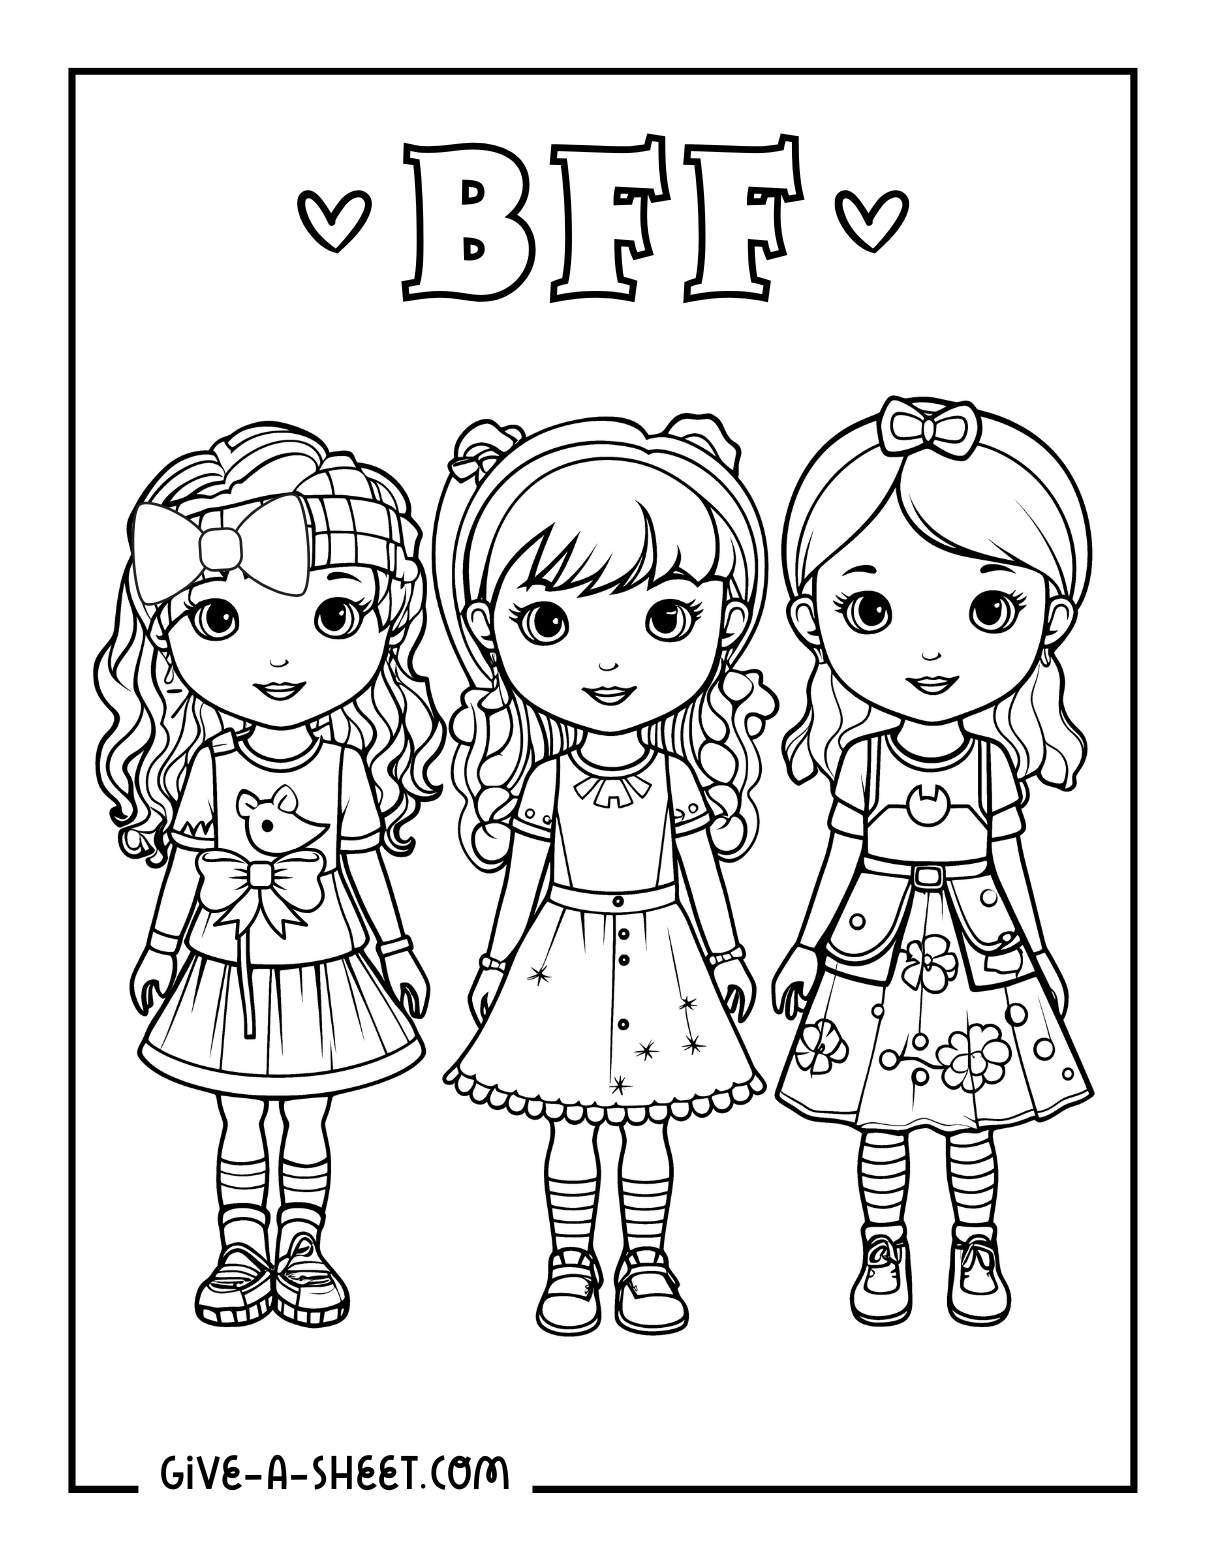 Fashion girls three bff coloring page.